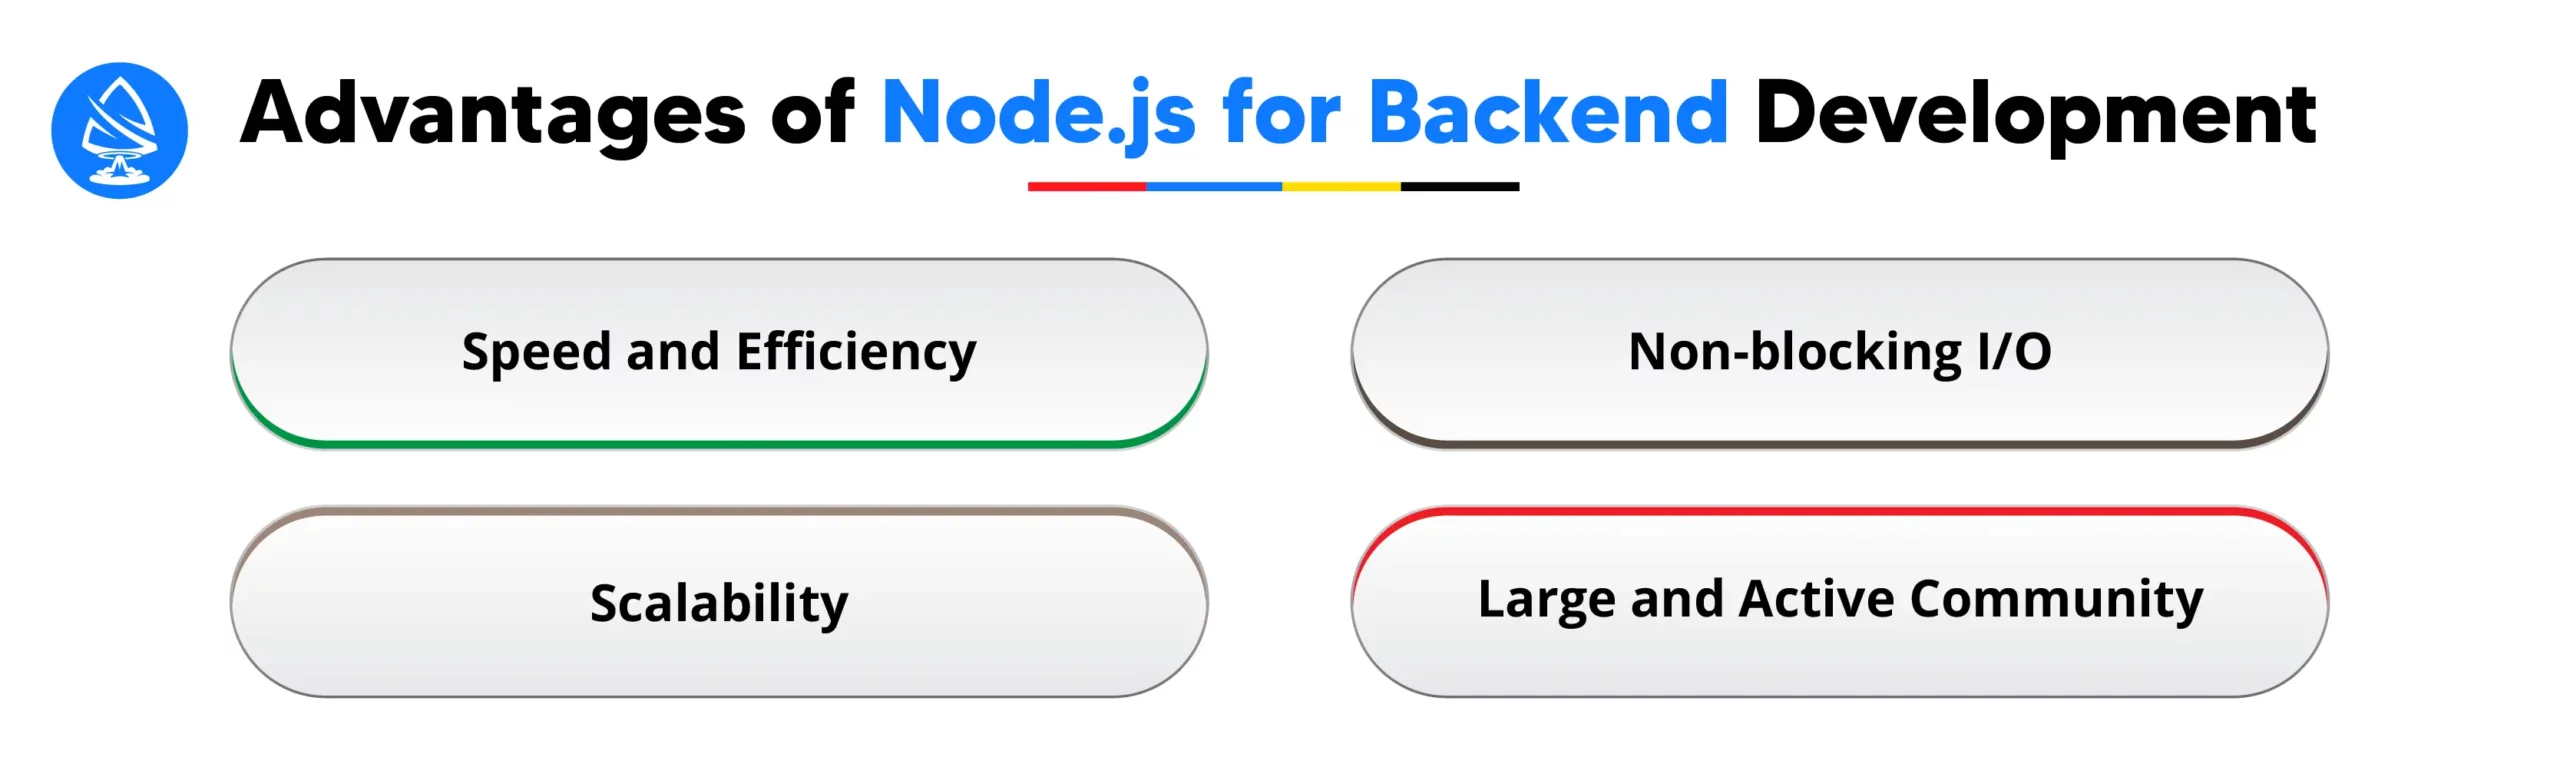 Advantages of Node.js for Backend Development